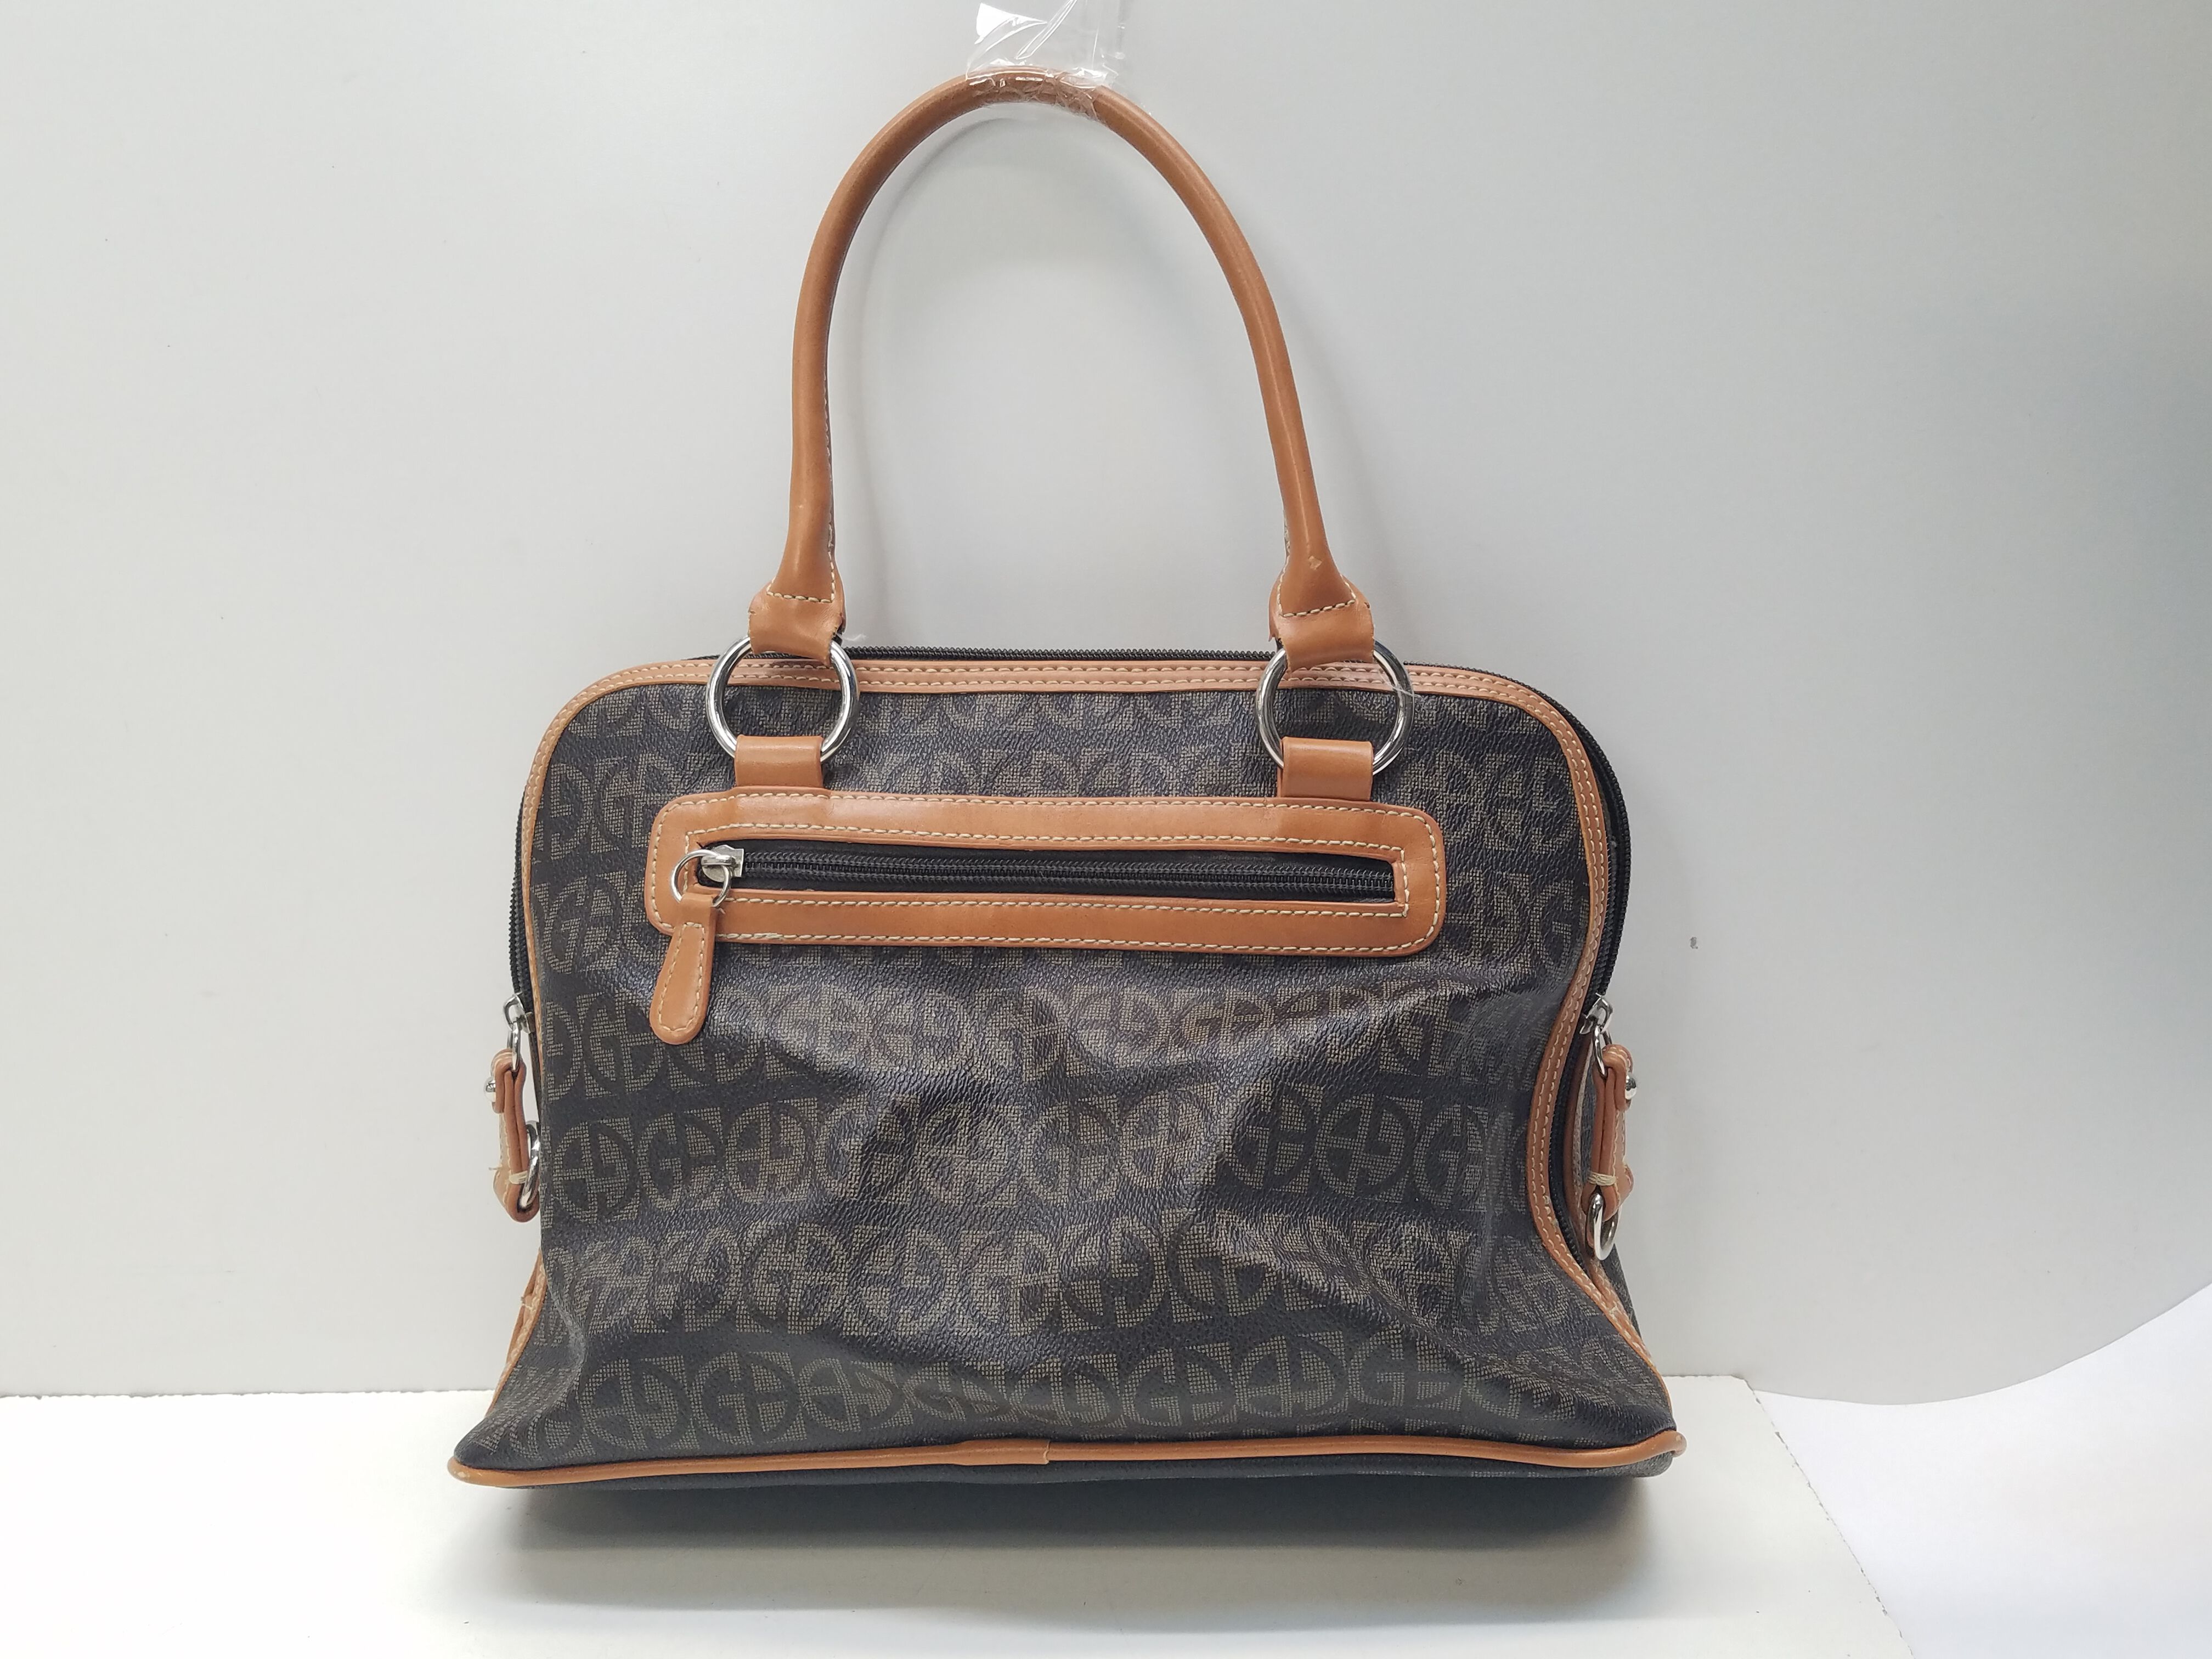 Giani Bernini Brown Sling Bag 2650 Bronze - Price in India | Flipkart.com